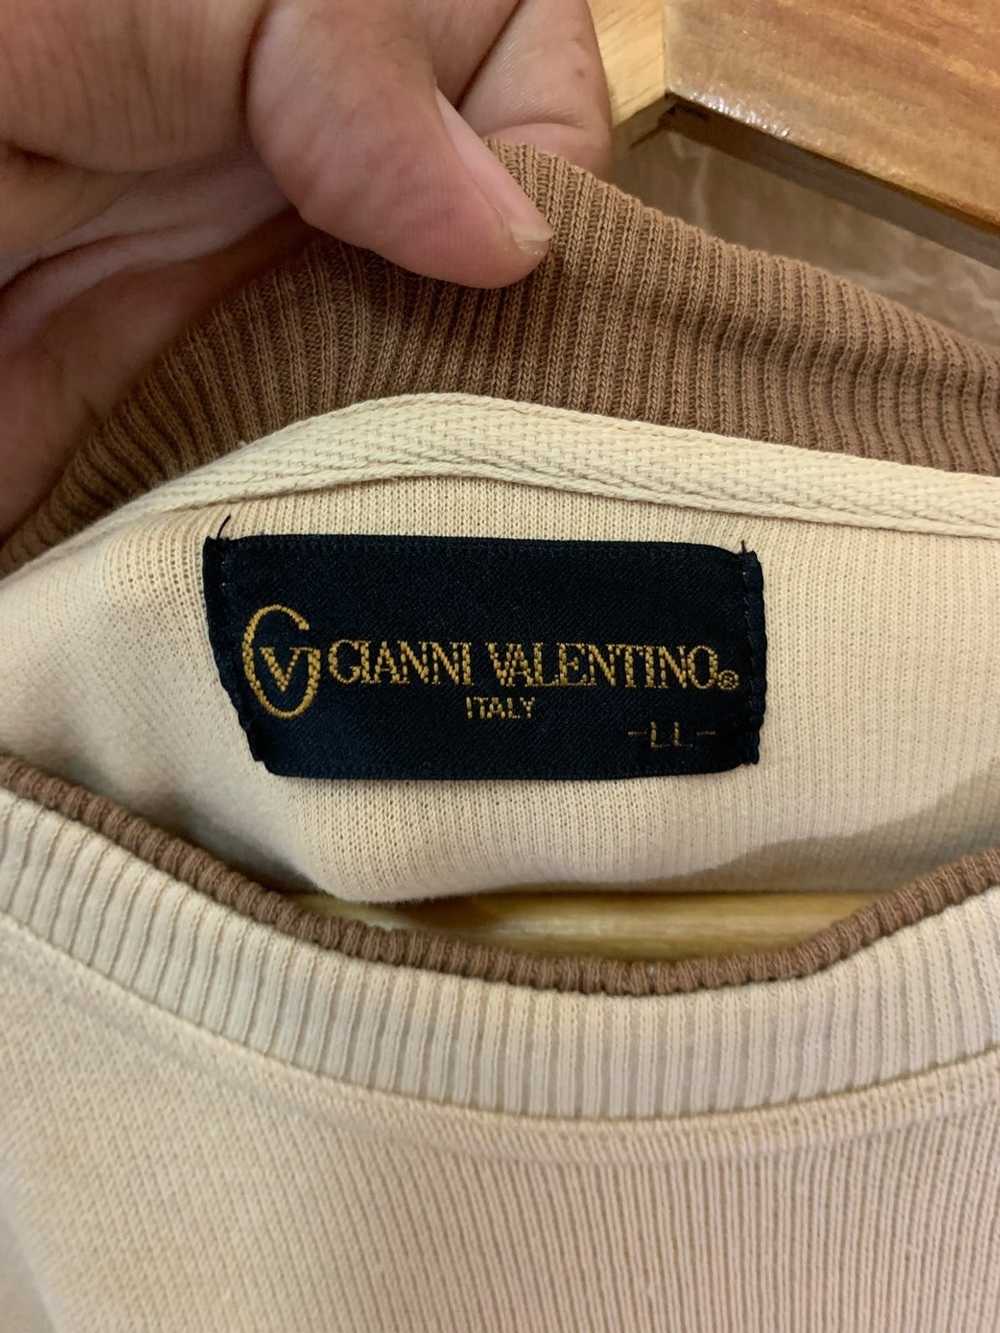 Gianni × Valentino Gianni Valentino Sweatshirt - image 4